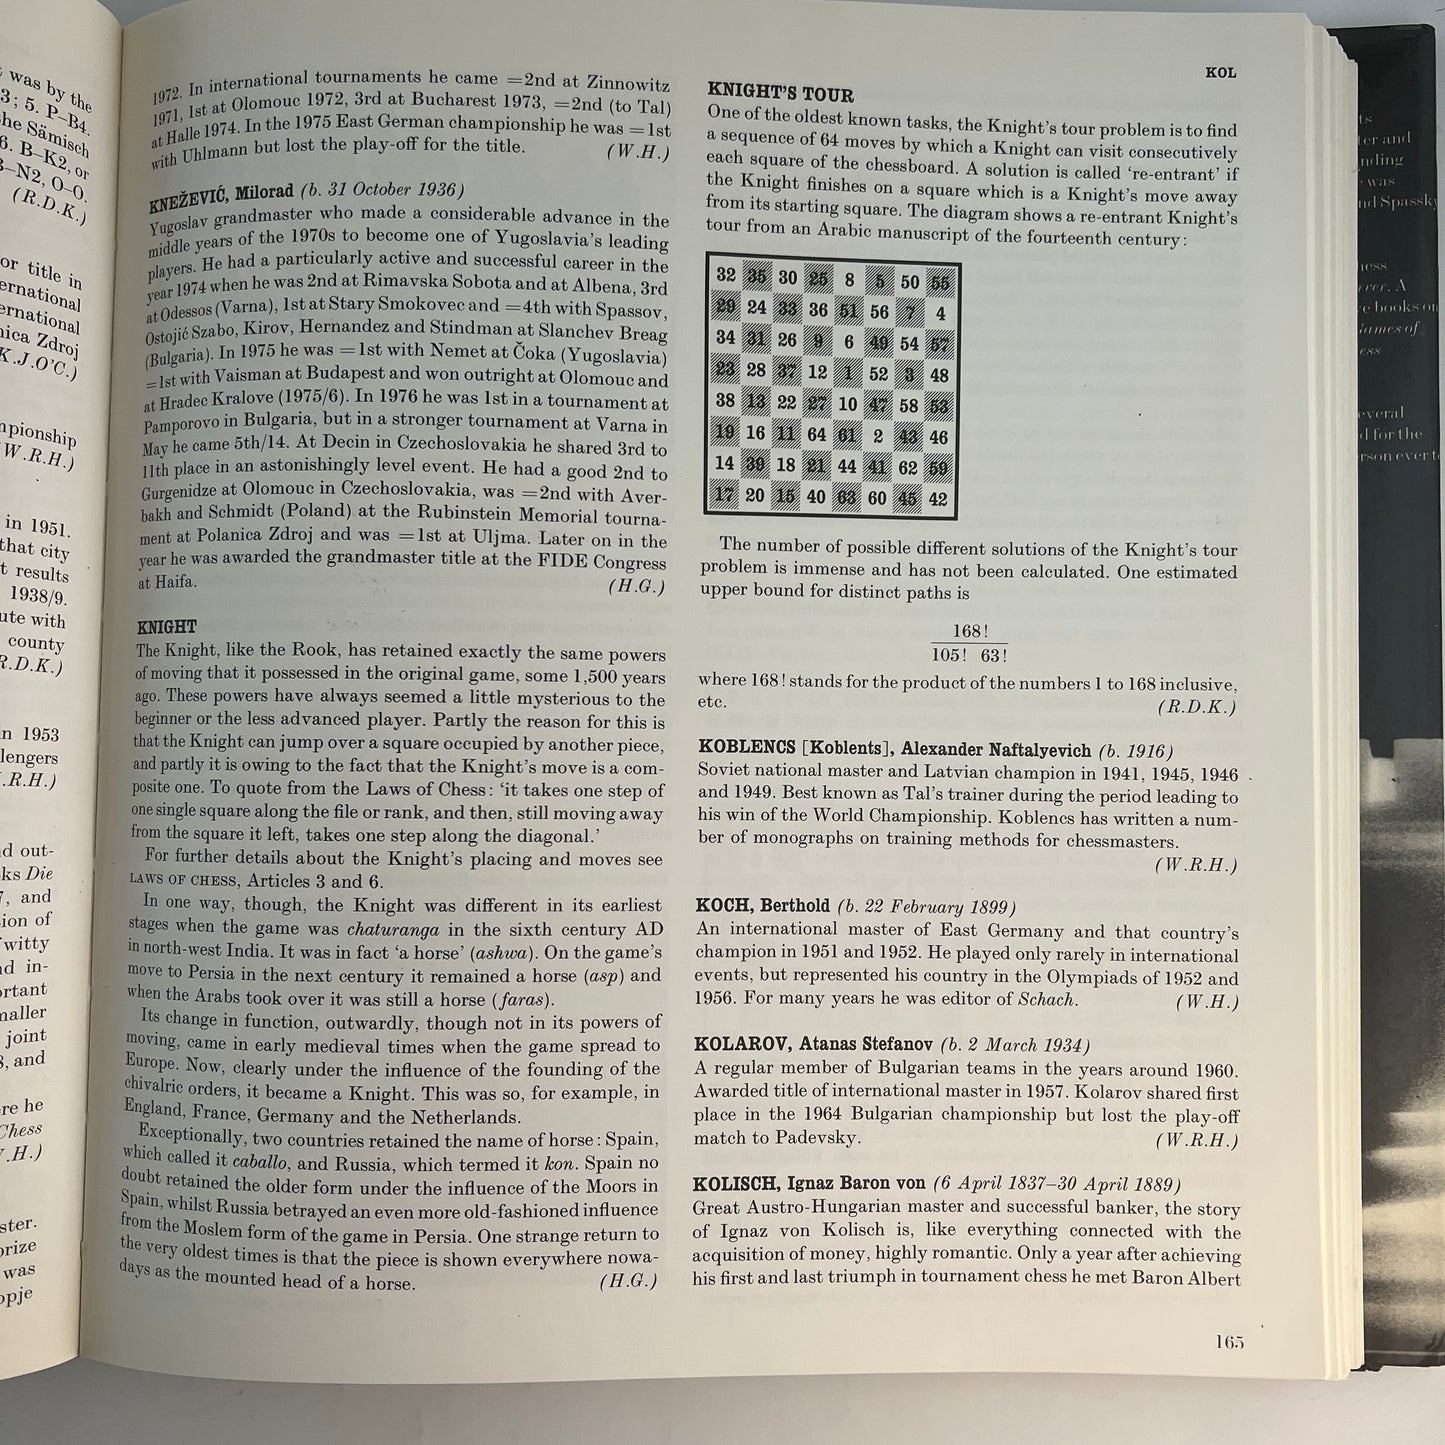 Golombek's Encyclopedia of Chess